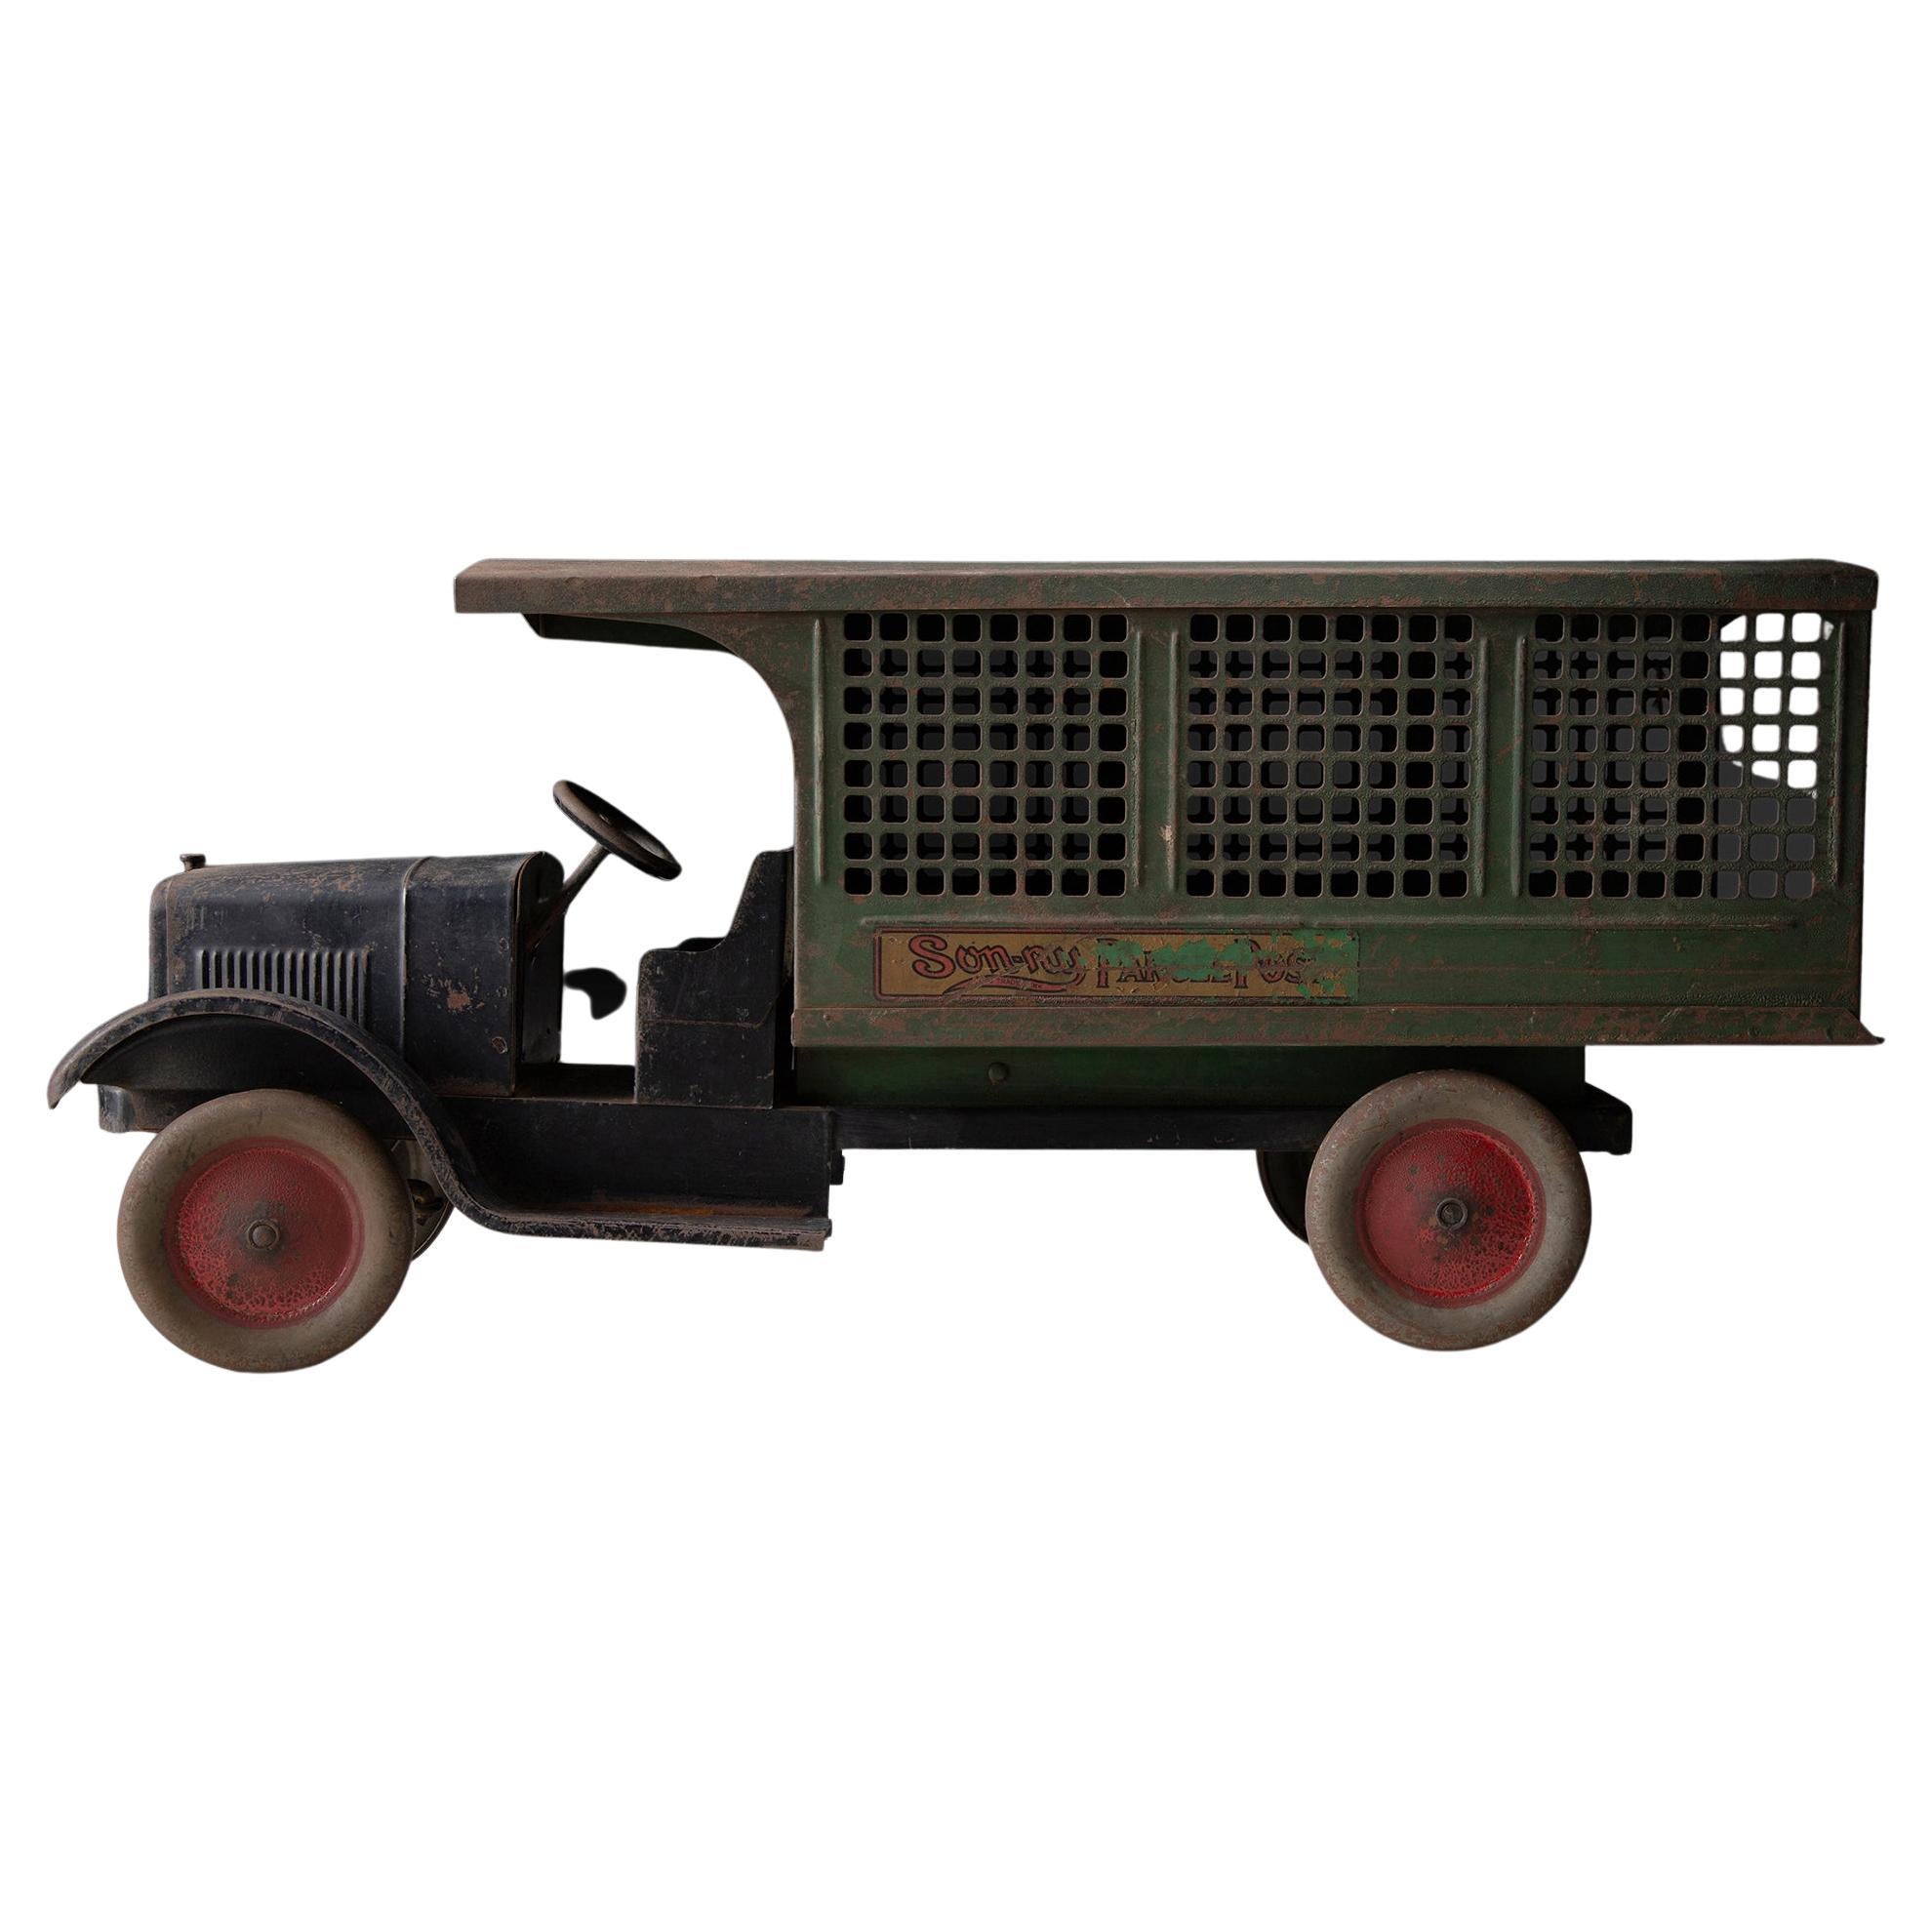 Dayton Sonny Parcel Post Toy Truck, America circa 1926